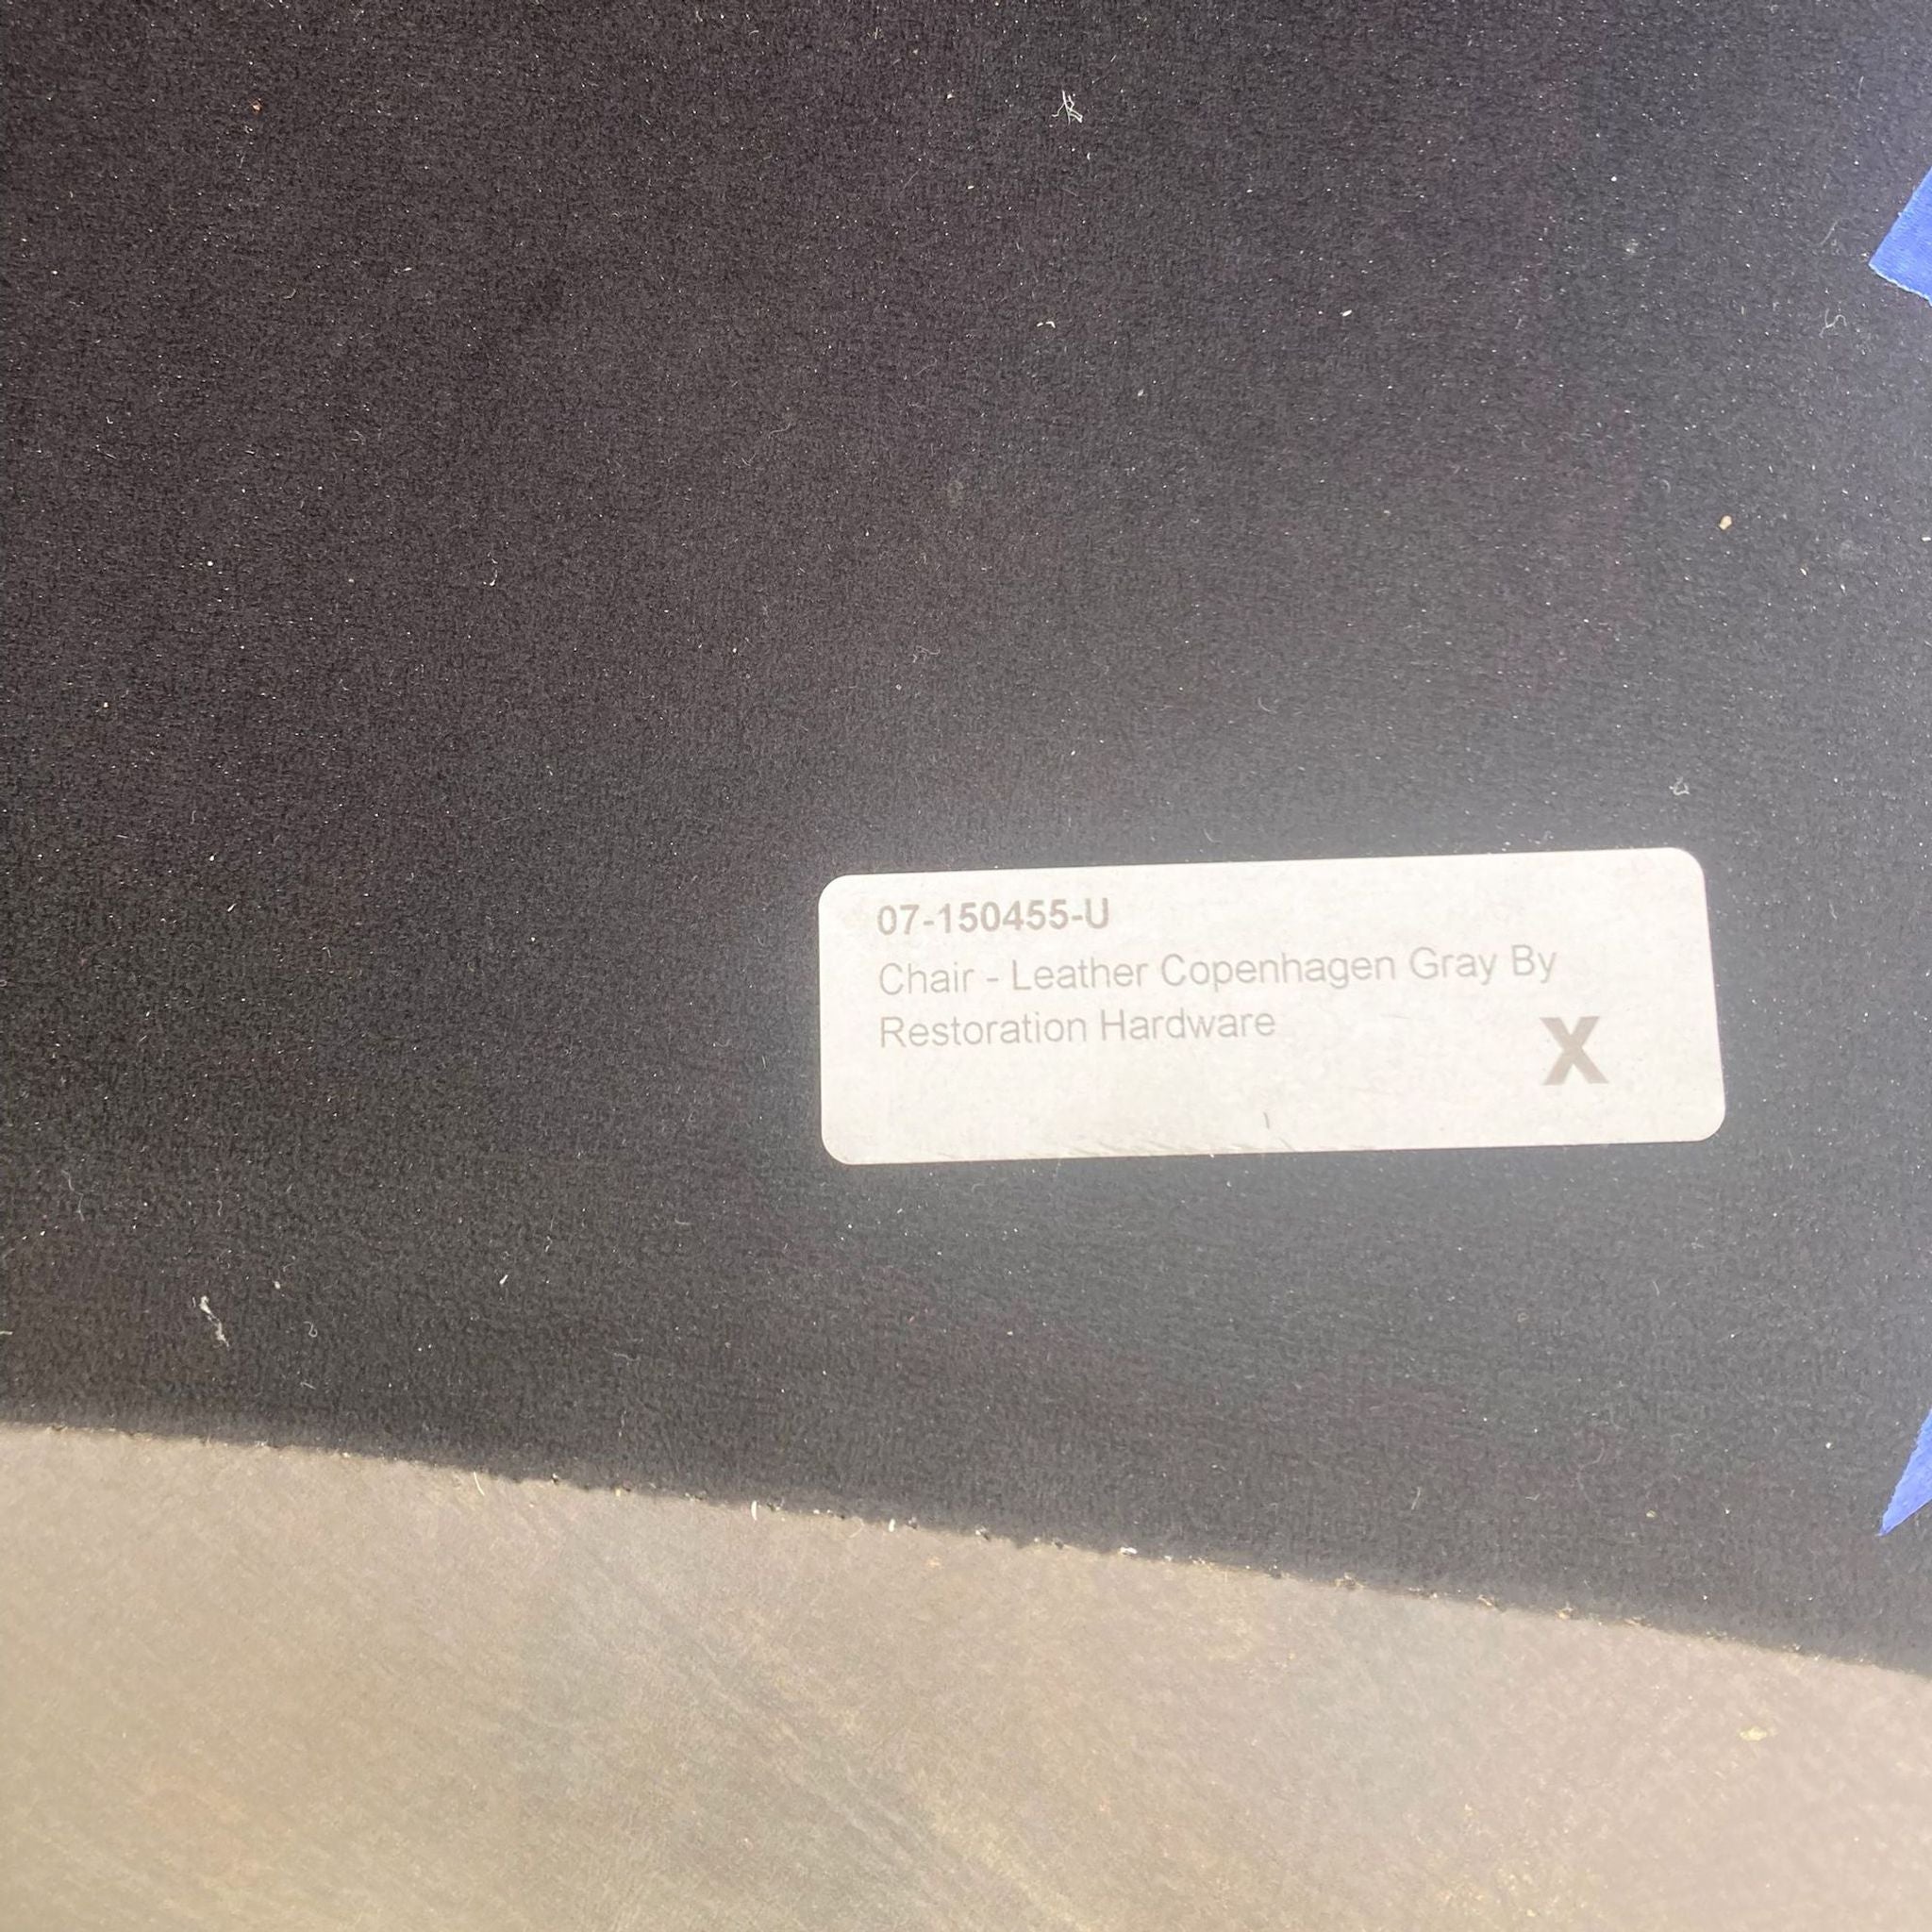 Label showing Restoration Hardware's Leather Copenhagen Gray chair specification.